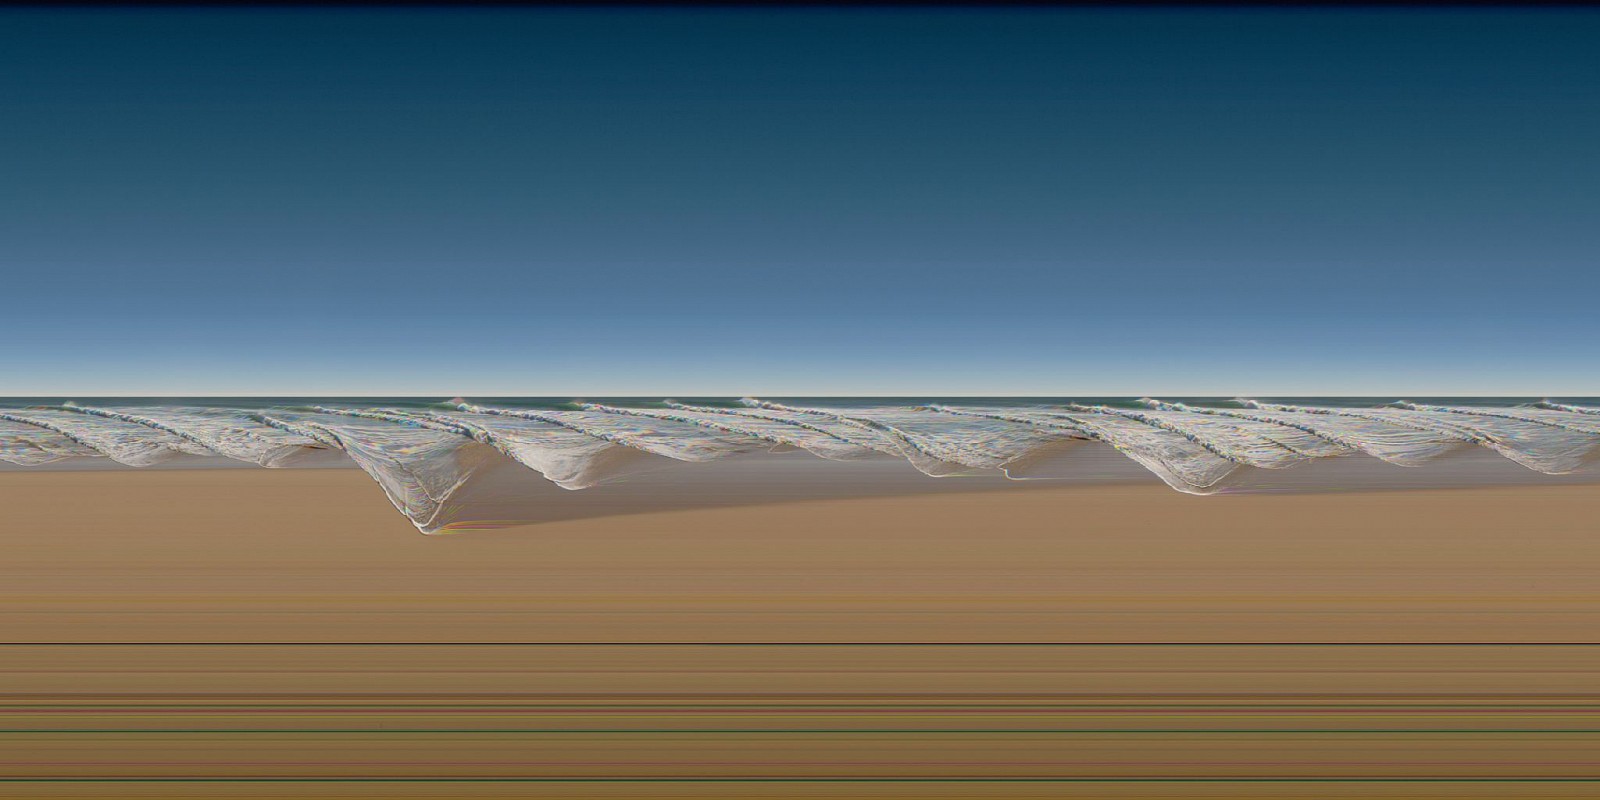 Jay Mark Johnson, CULBURRA WAVES #24, 2012 Australia
archival pigment on paper, mounted on aluminum, 40 x 80 in. (101.6 x 203.2 cm)